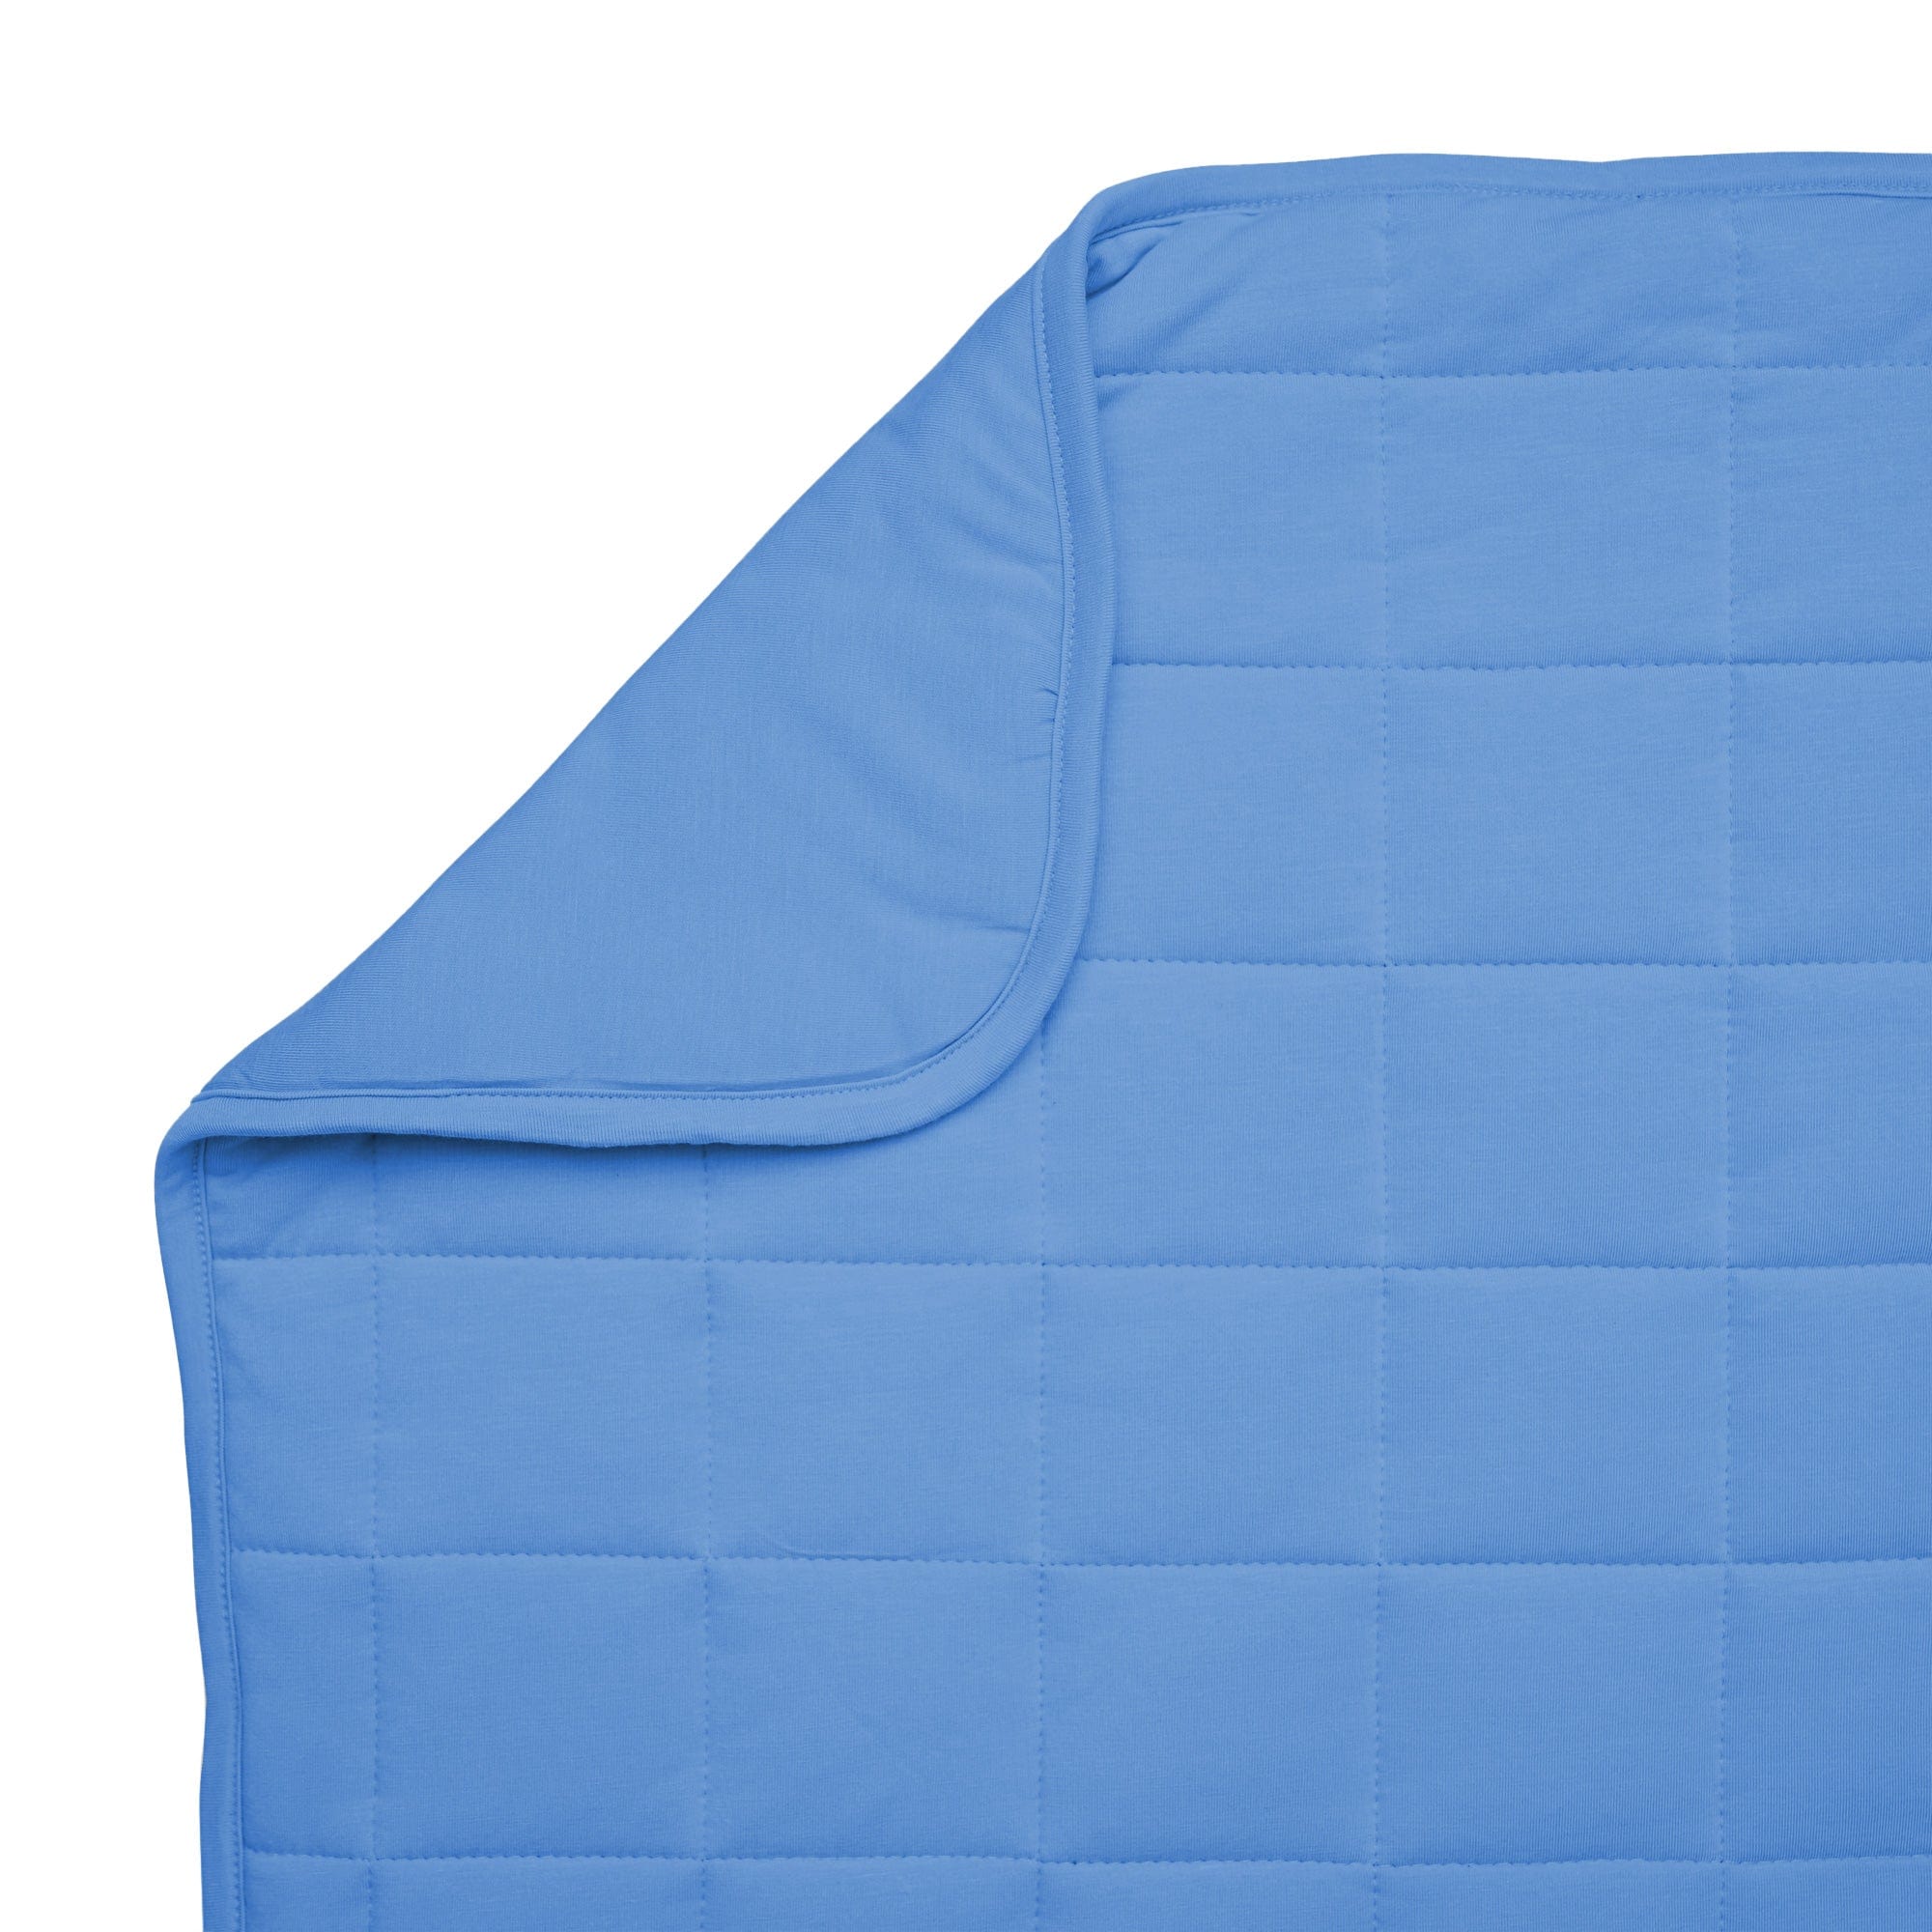 Kyte BABY Adult Blanket Periwinkle / Adult Adult Quilted Blanket in Periwinkle 2.5